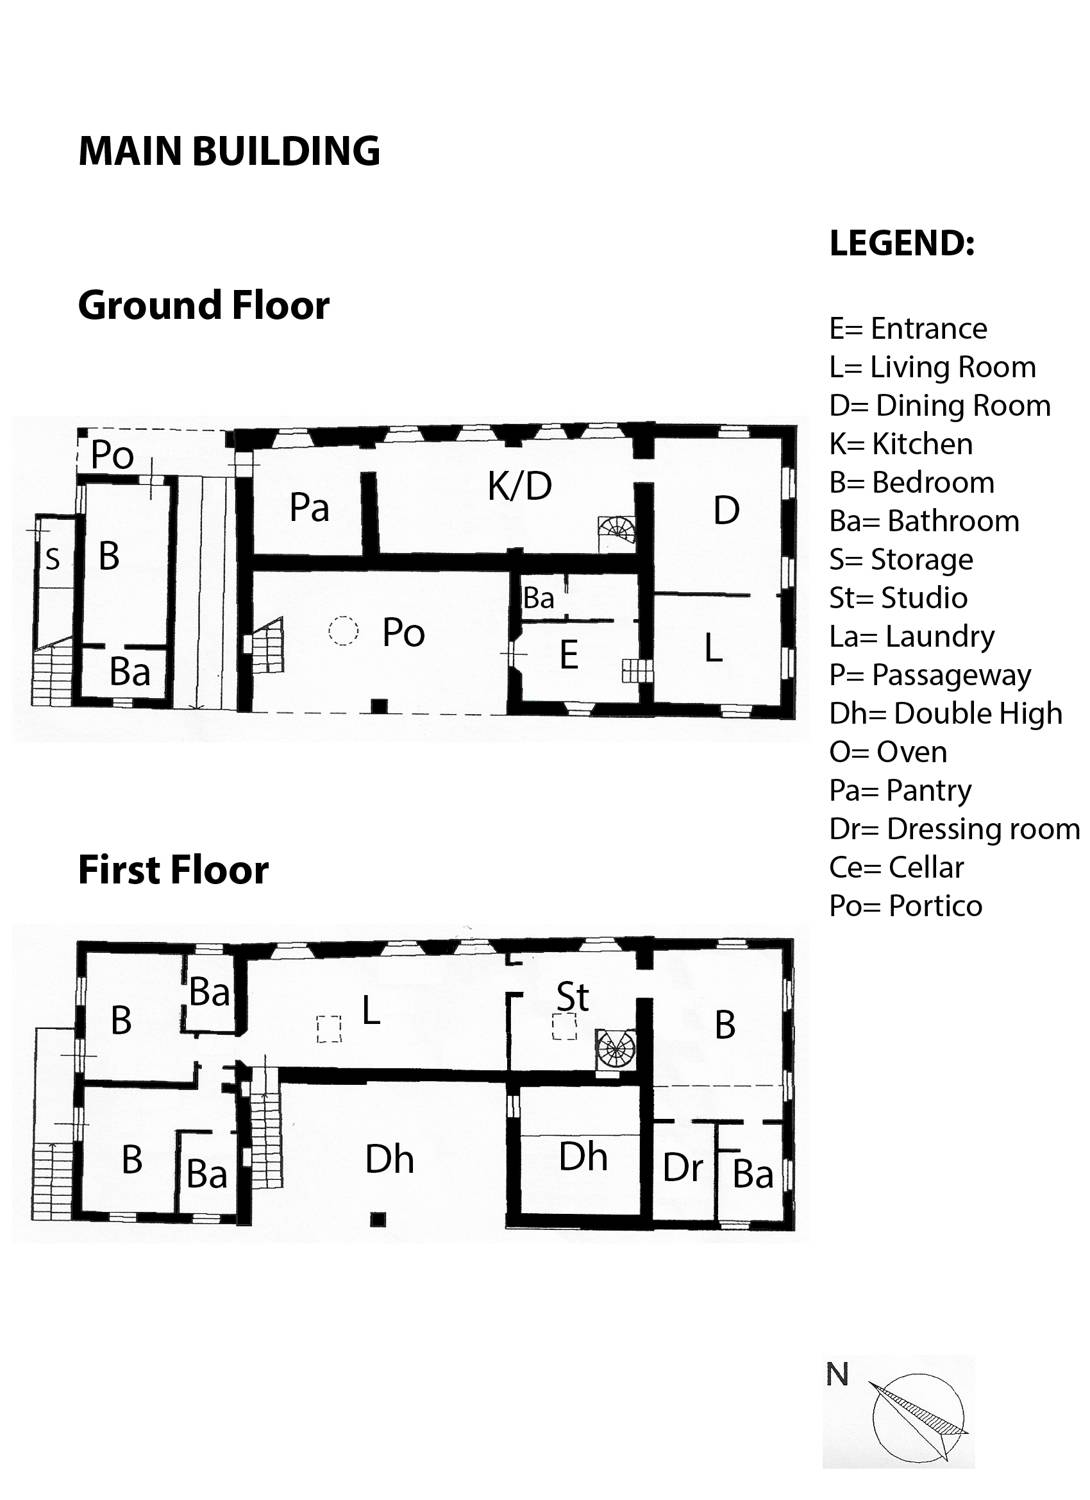 Floor Plans - Main Building